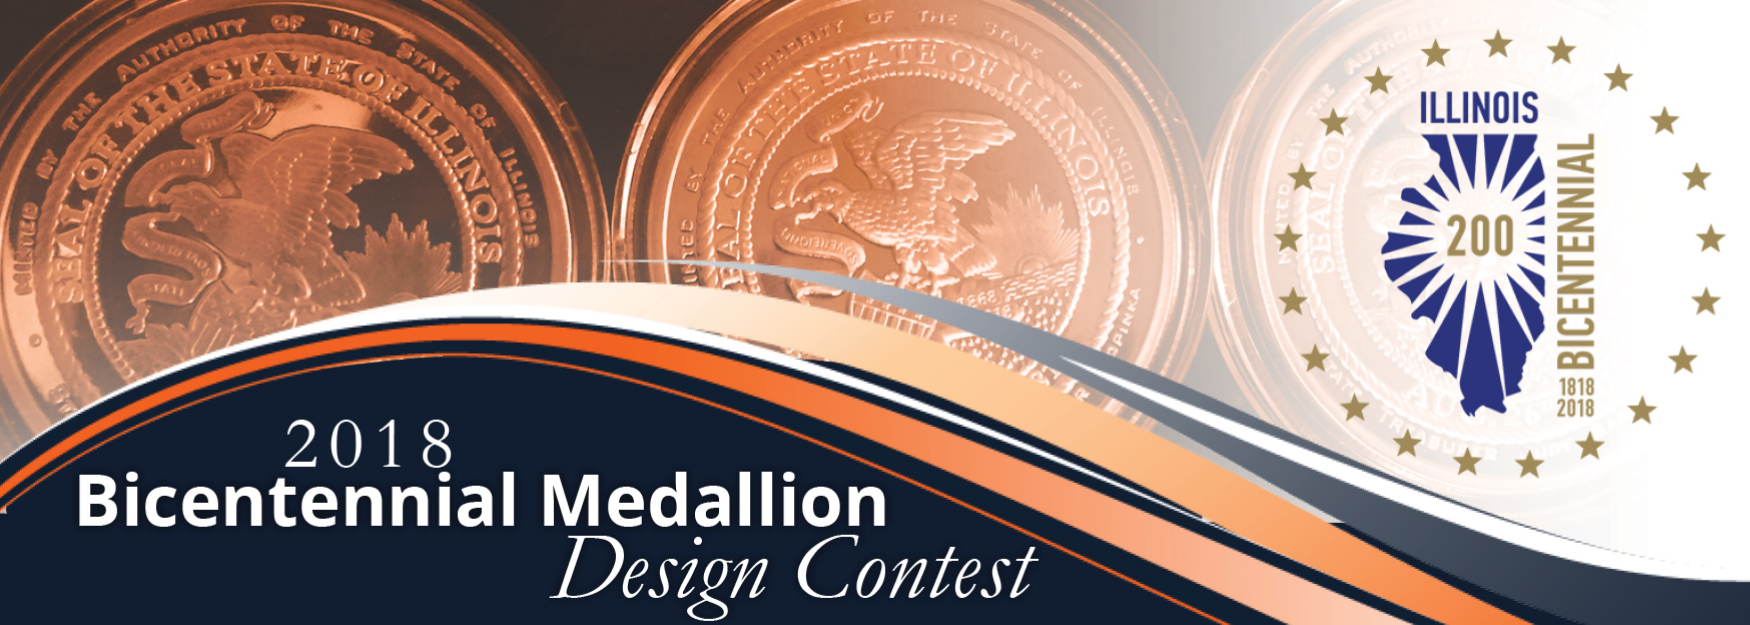 2018 Bicentennial Medallion Design Contest